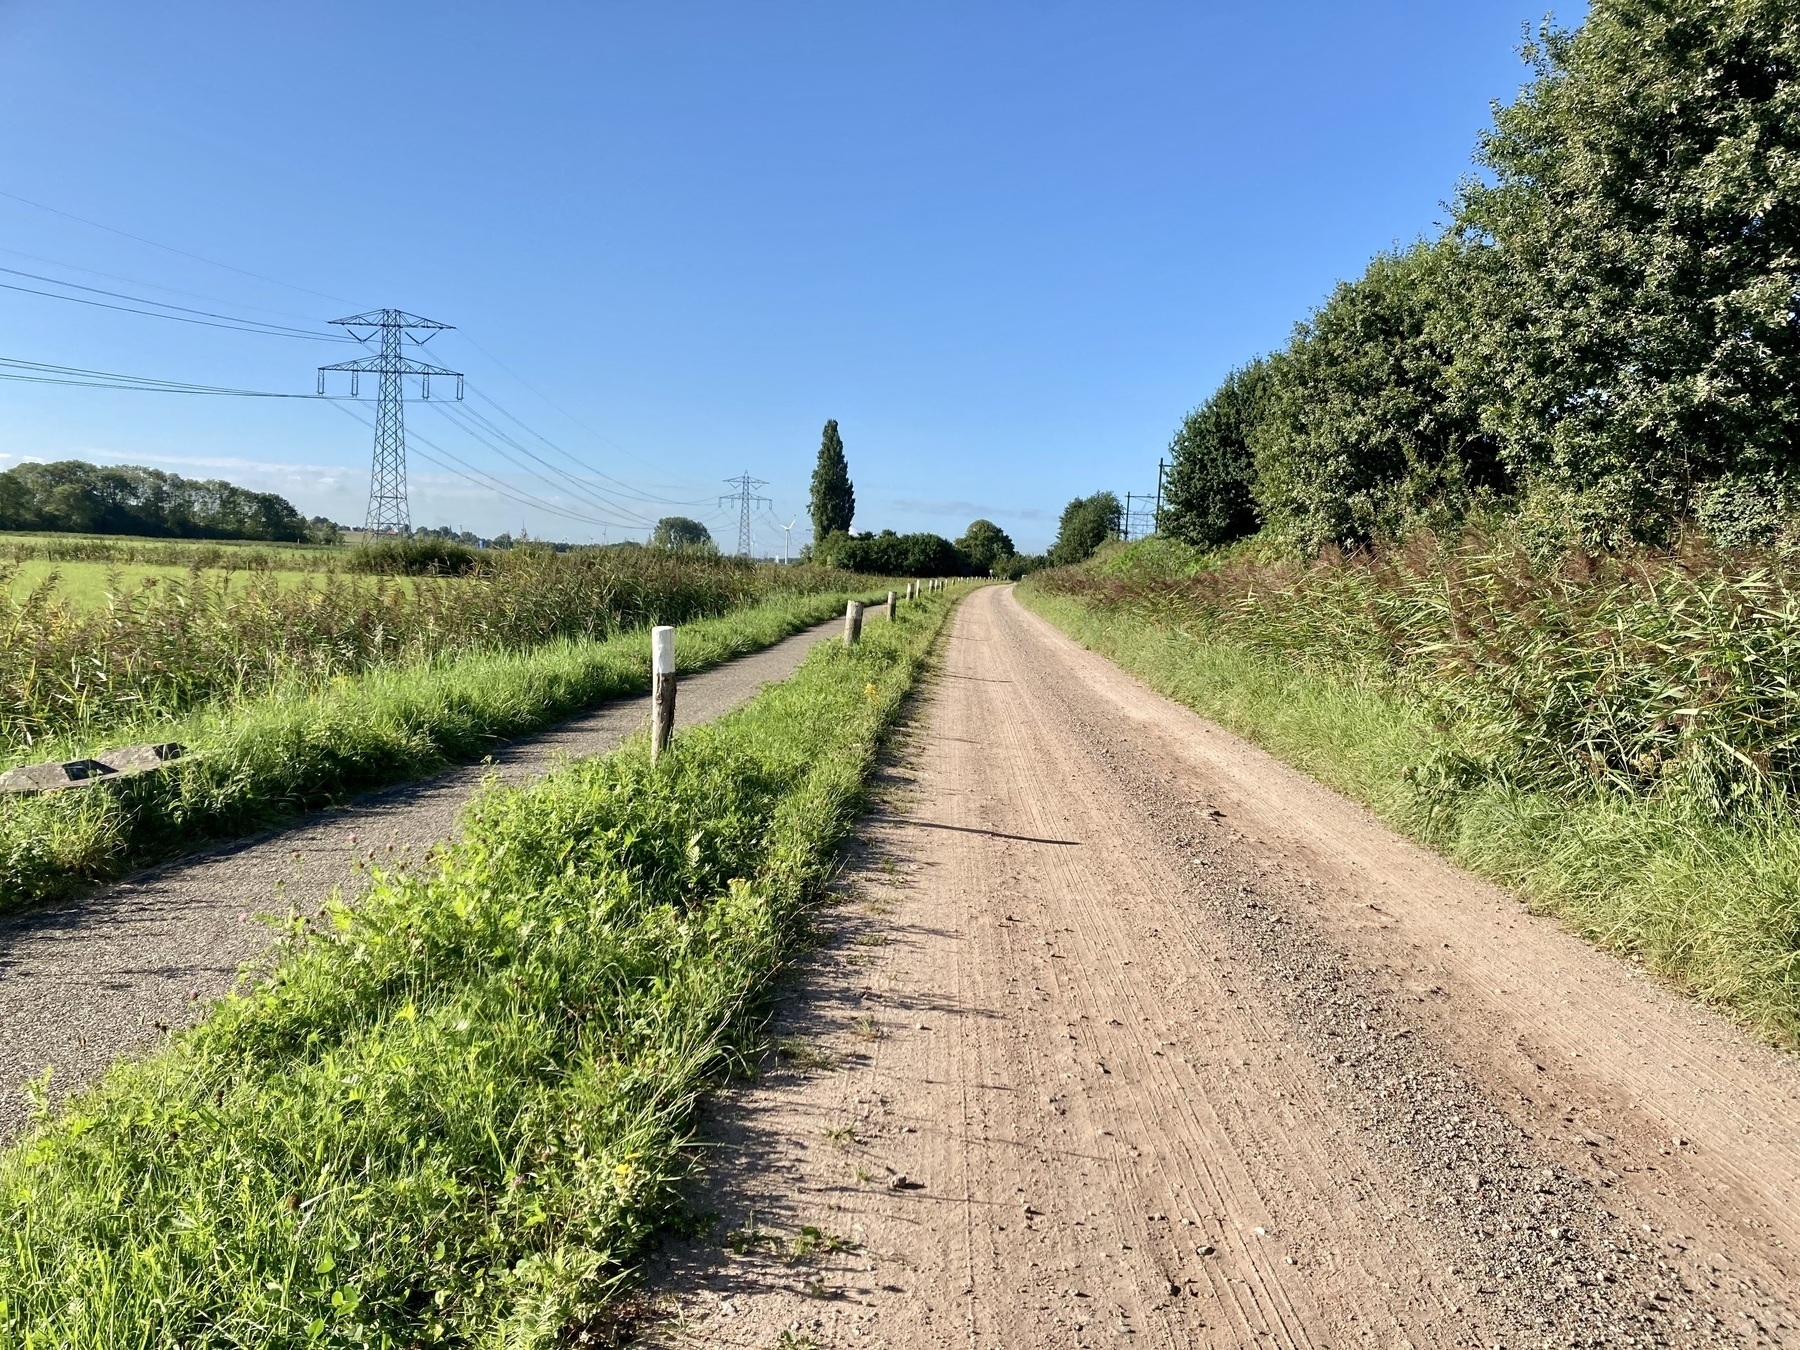 narrow straight dirt road with bike lane alongside